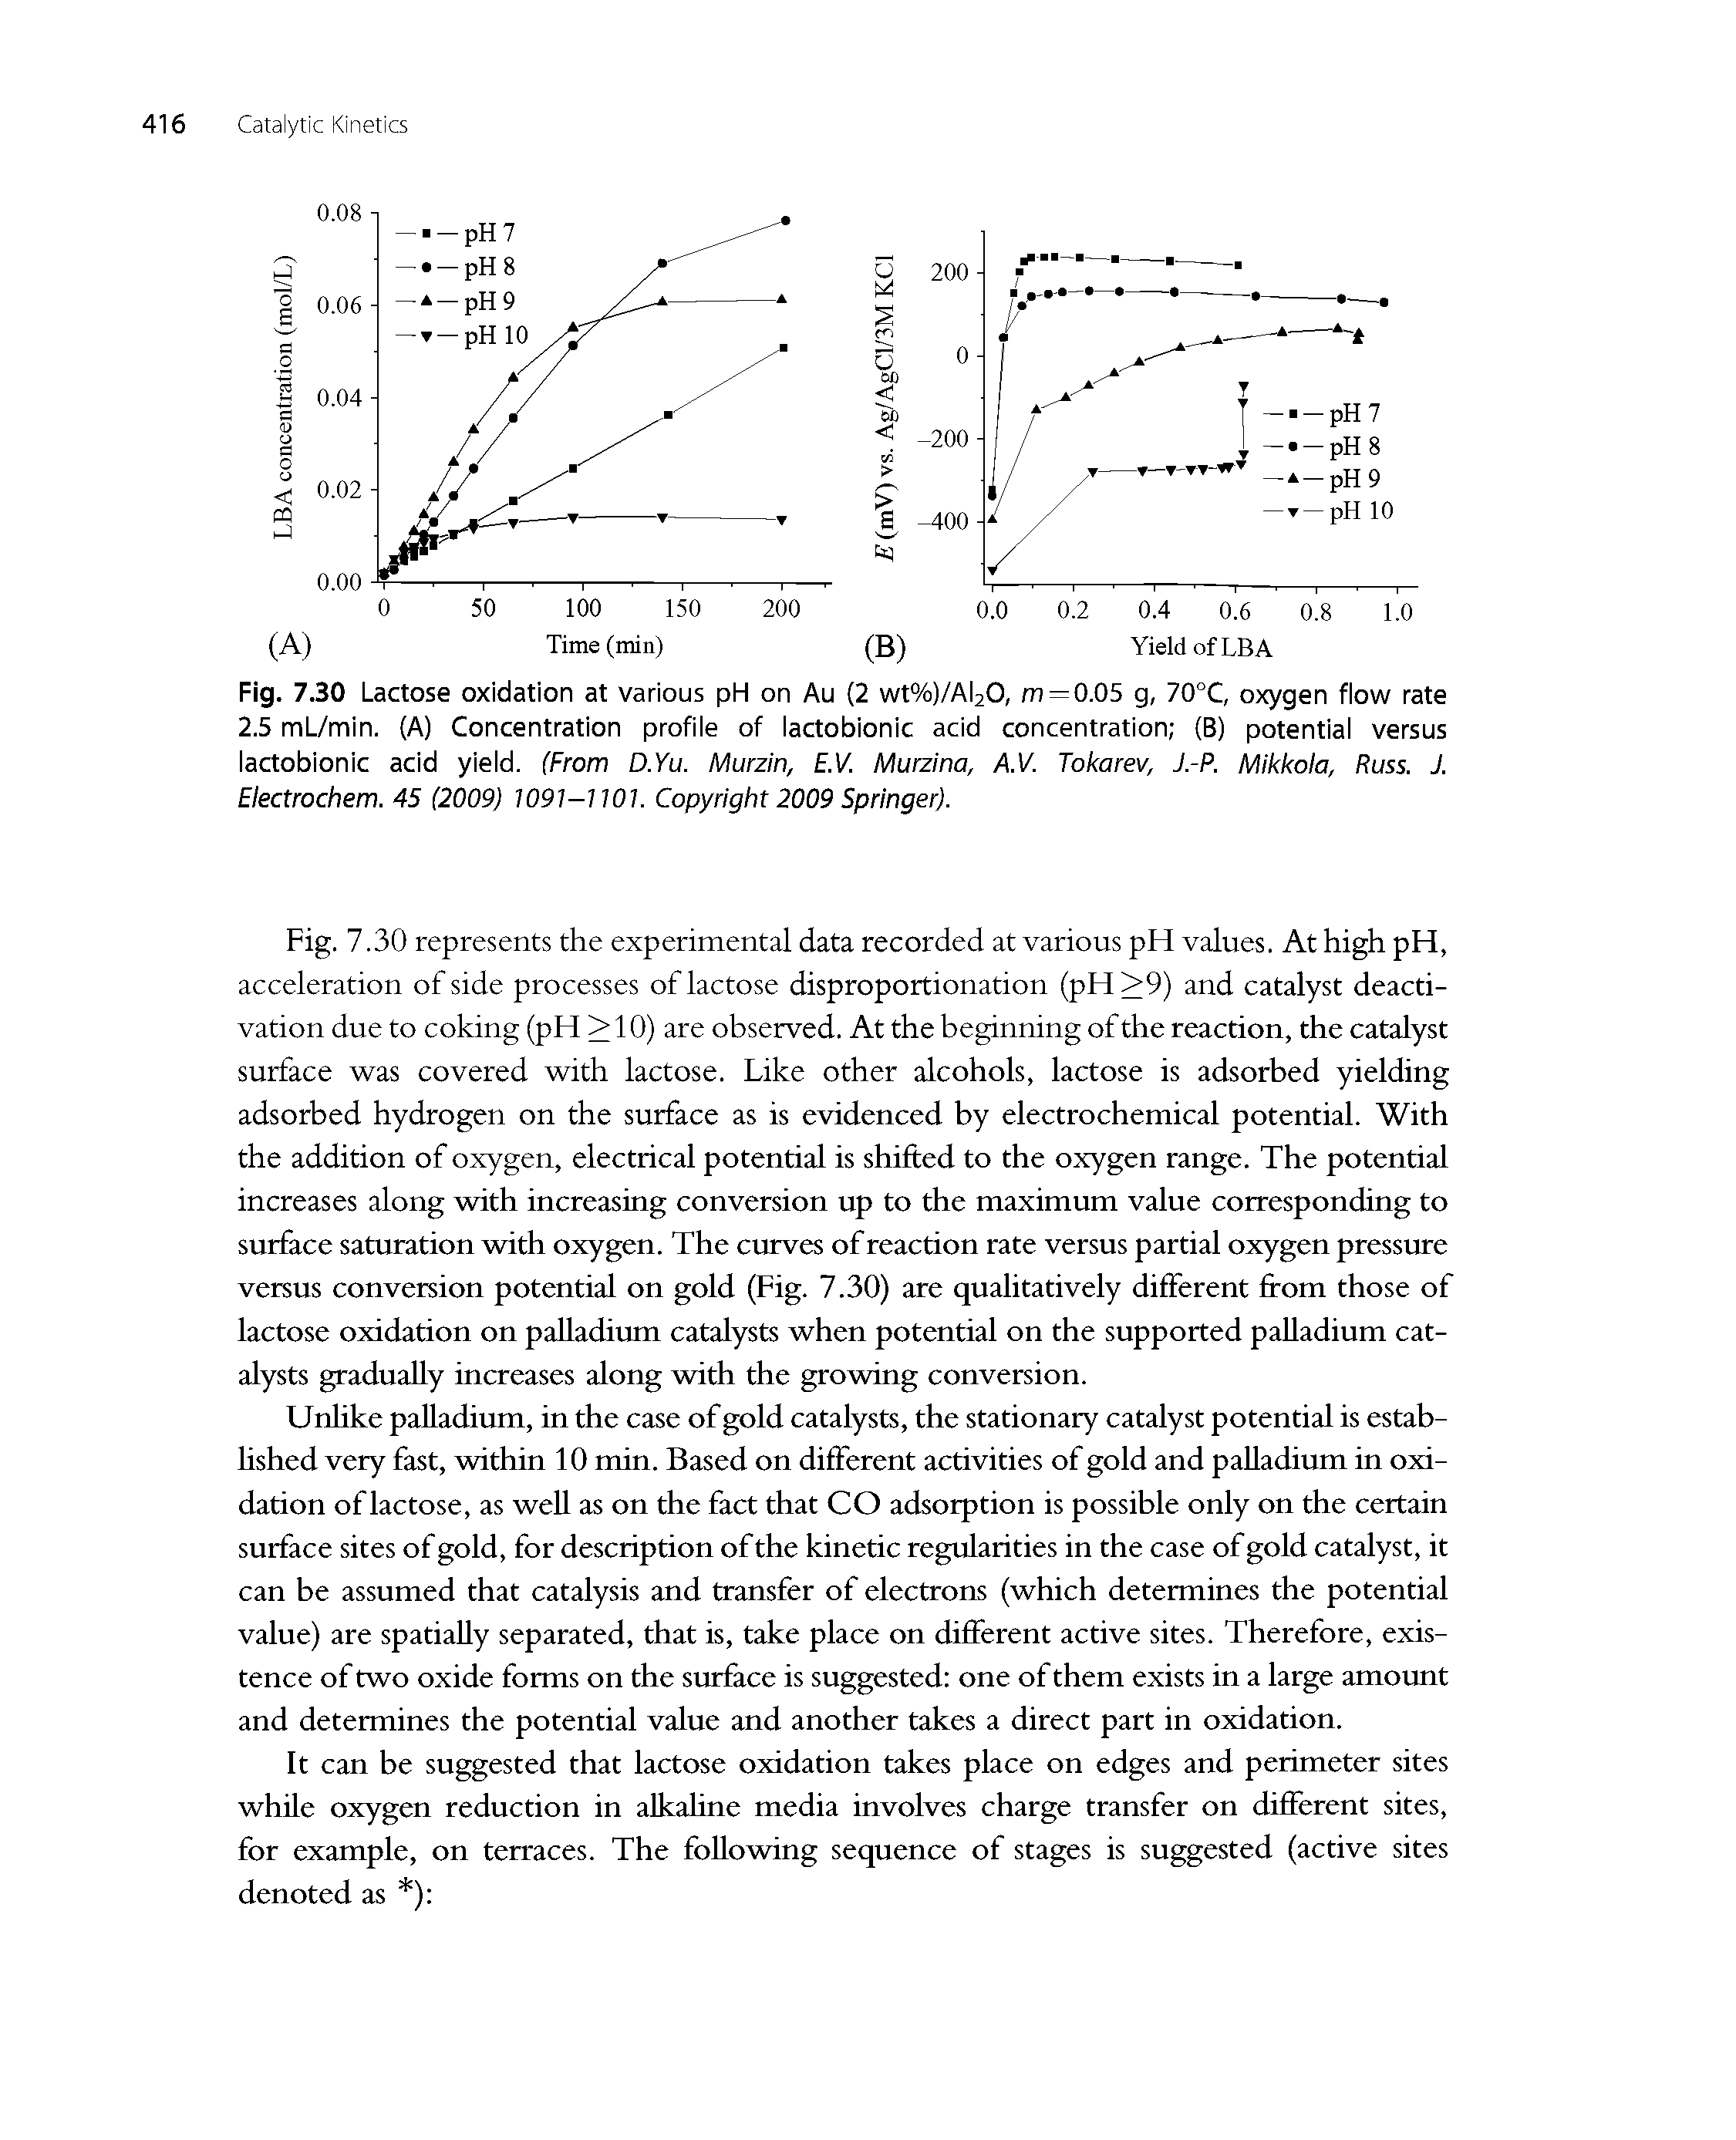 Fig. 7.30 Lactose oxidation at various pH on Au (2 wt%)/Al20, m—0.05 g, 70°C, oxygen flow rate 2.5 mL/min. (A) Concentration profile of lactobionic acid concentration (B) potential versus lactobionic acid yield. (From D.Yu. Murzin, E.V. Murzina, A.V. Tokarev, J.-P. Mikkola, Russ. J. Electrochem. 45 (2009) 1091—1101. Copyright 2009 Springer).